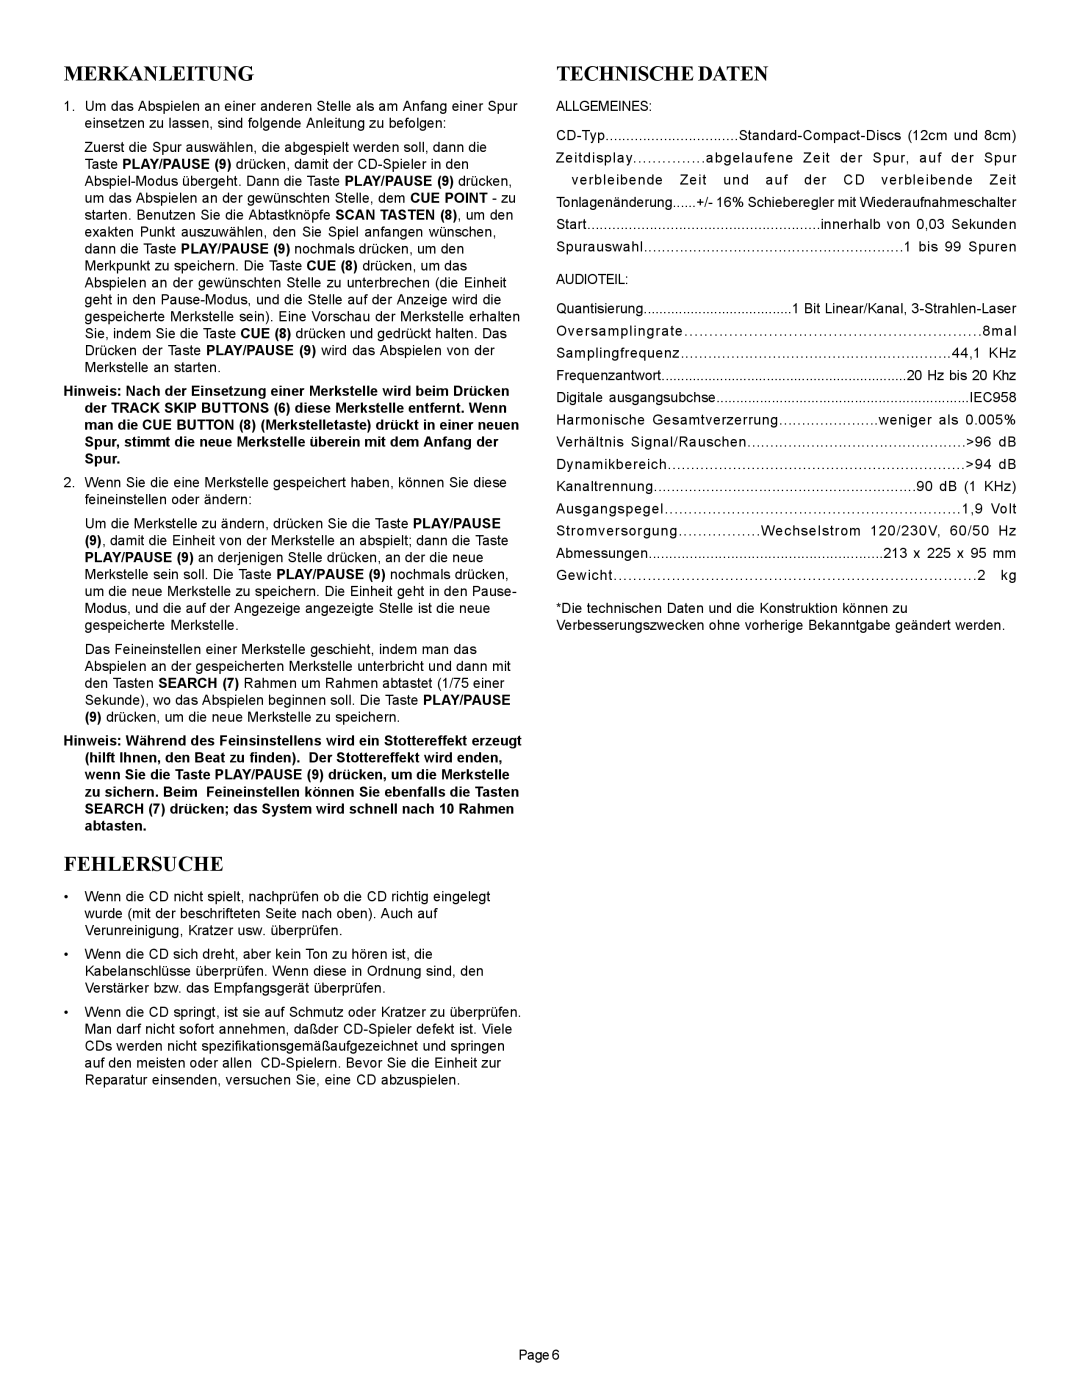 Gemini CDJ-10 manual Merkanleitung, Fehlersuche, Technische Daten 